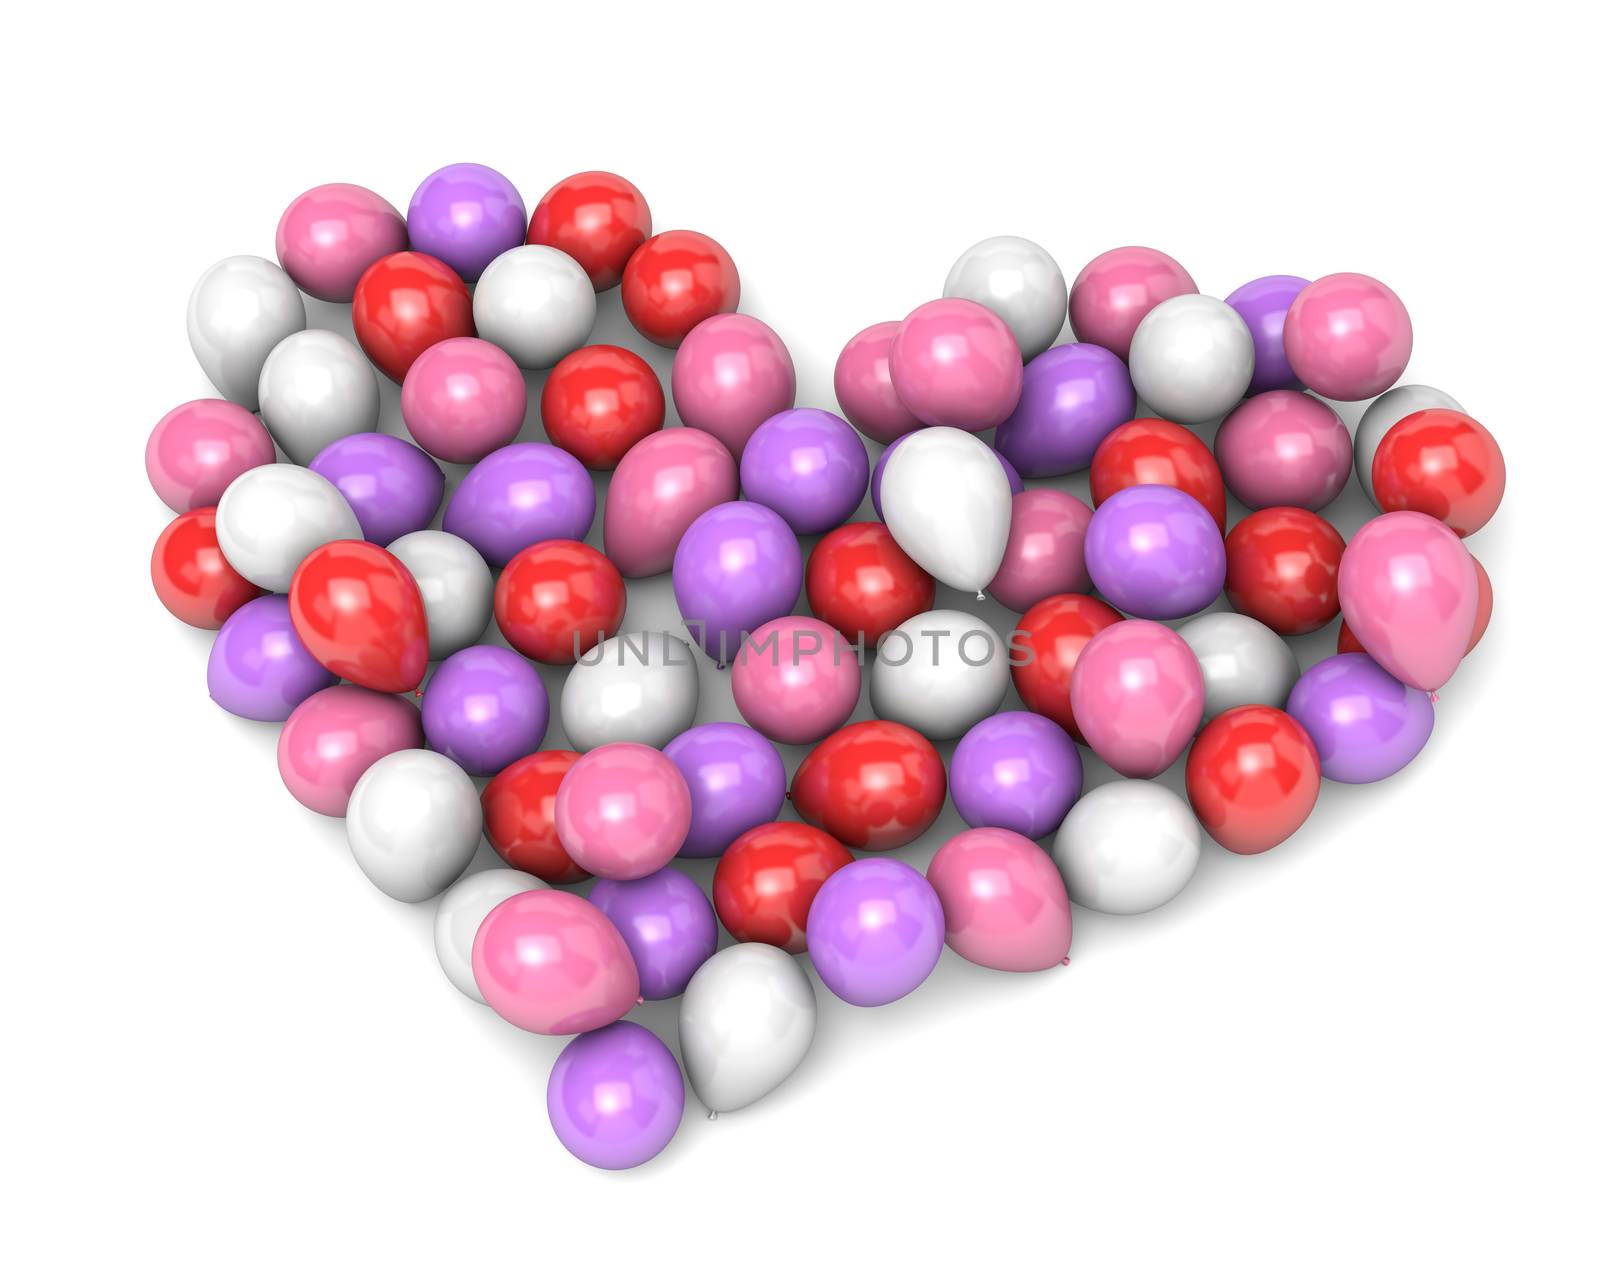 Romantic Color Balloons Arranged as Heart Shape on White Background 3D Illustration